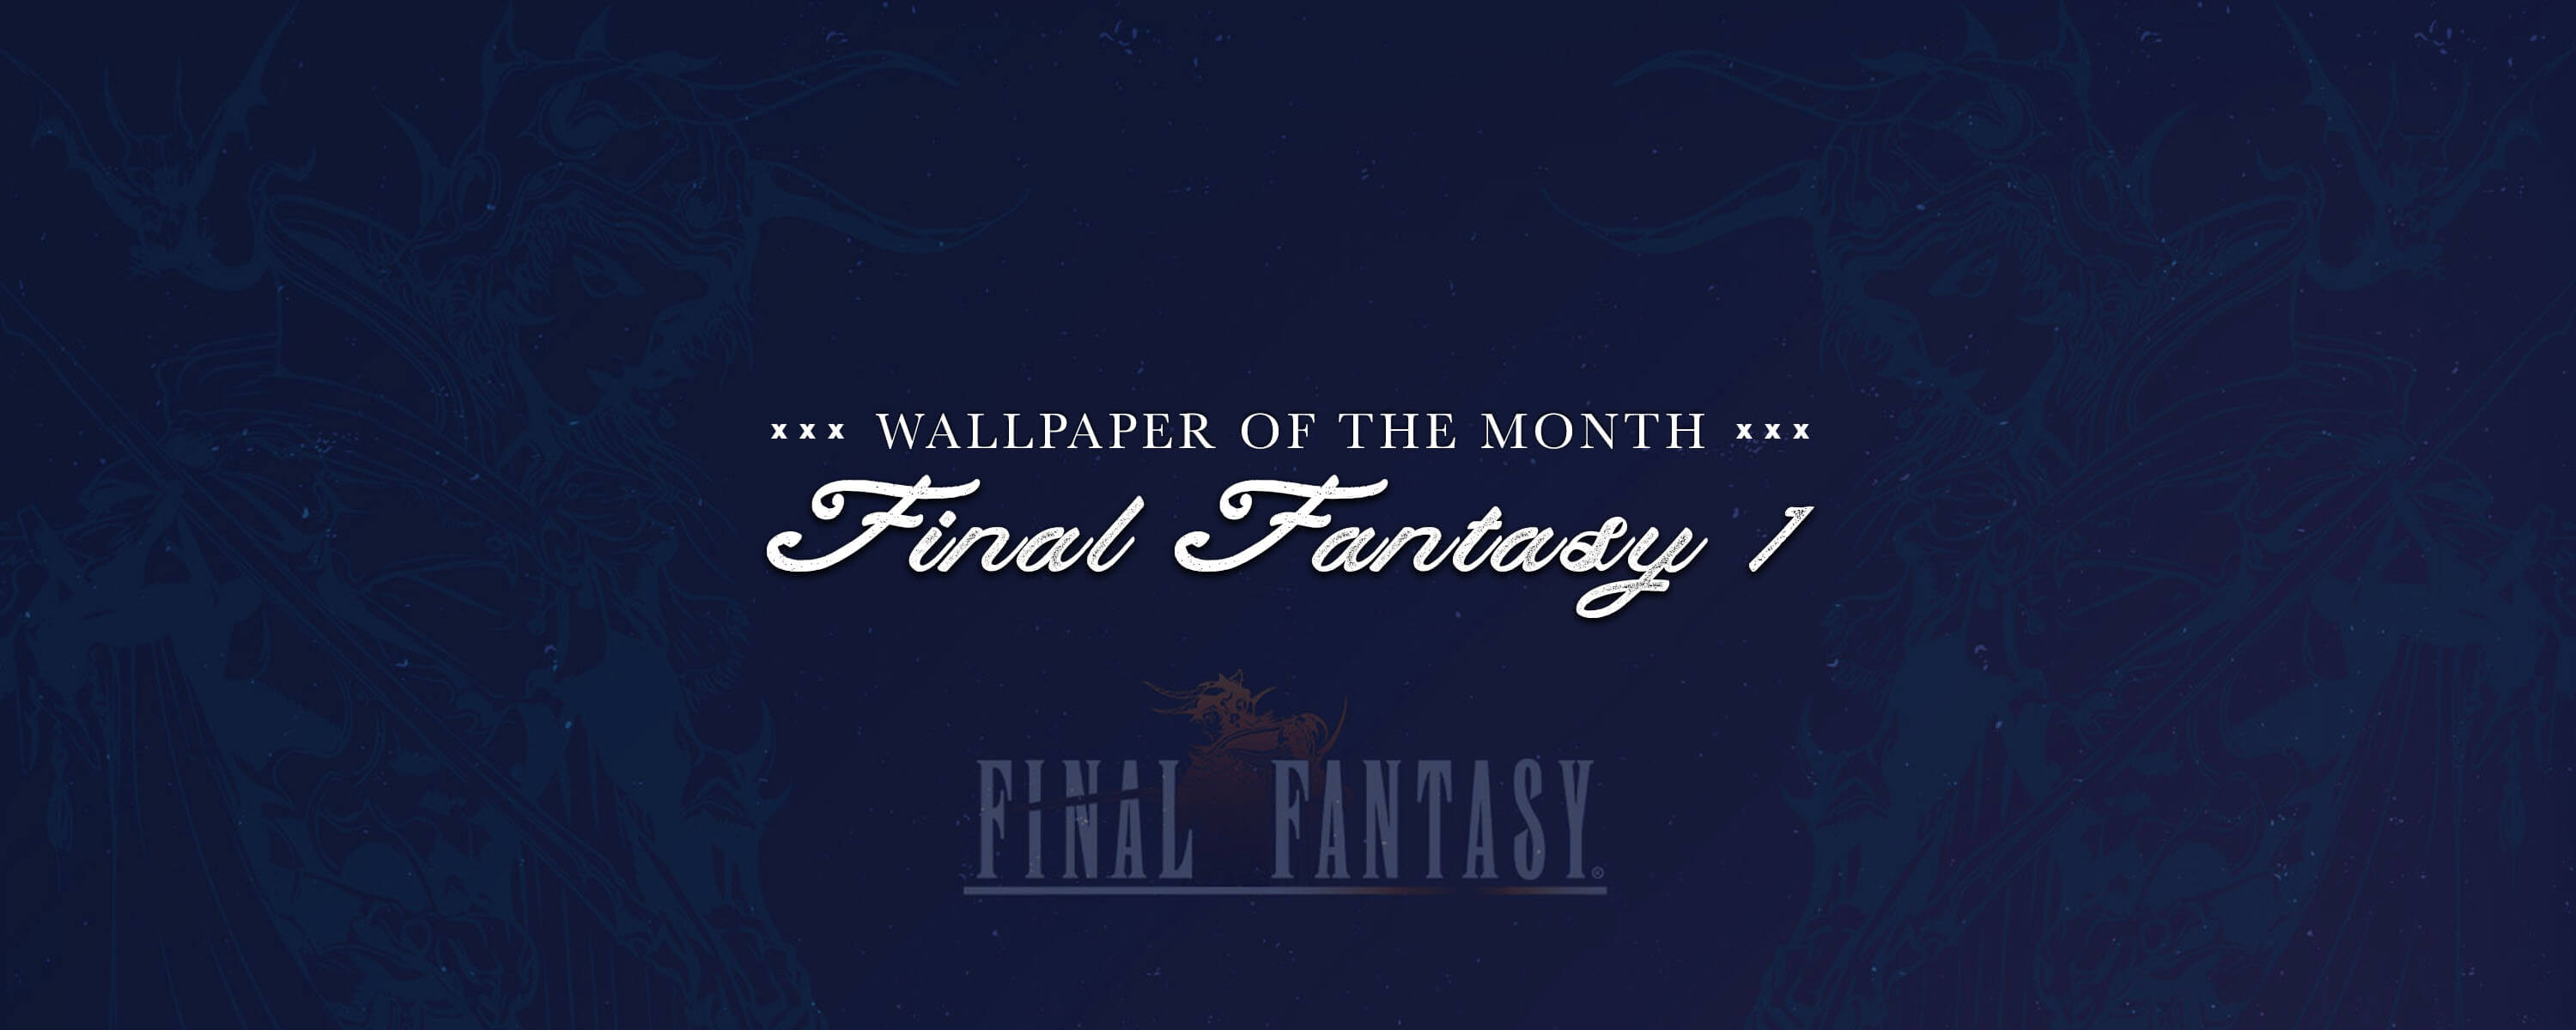 Final Fantasy Logo Wallpapers - Wallpaper Cave